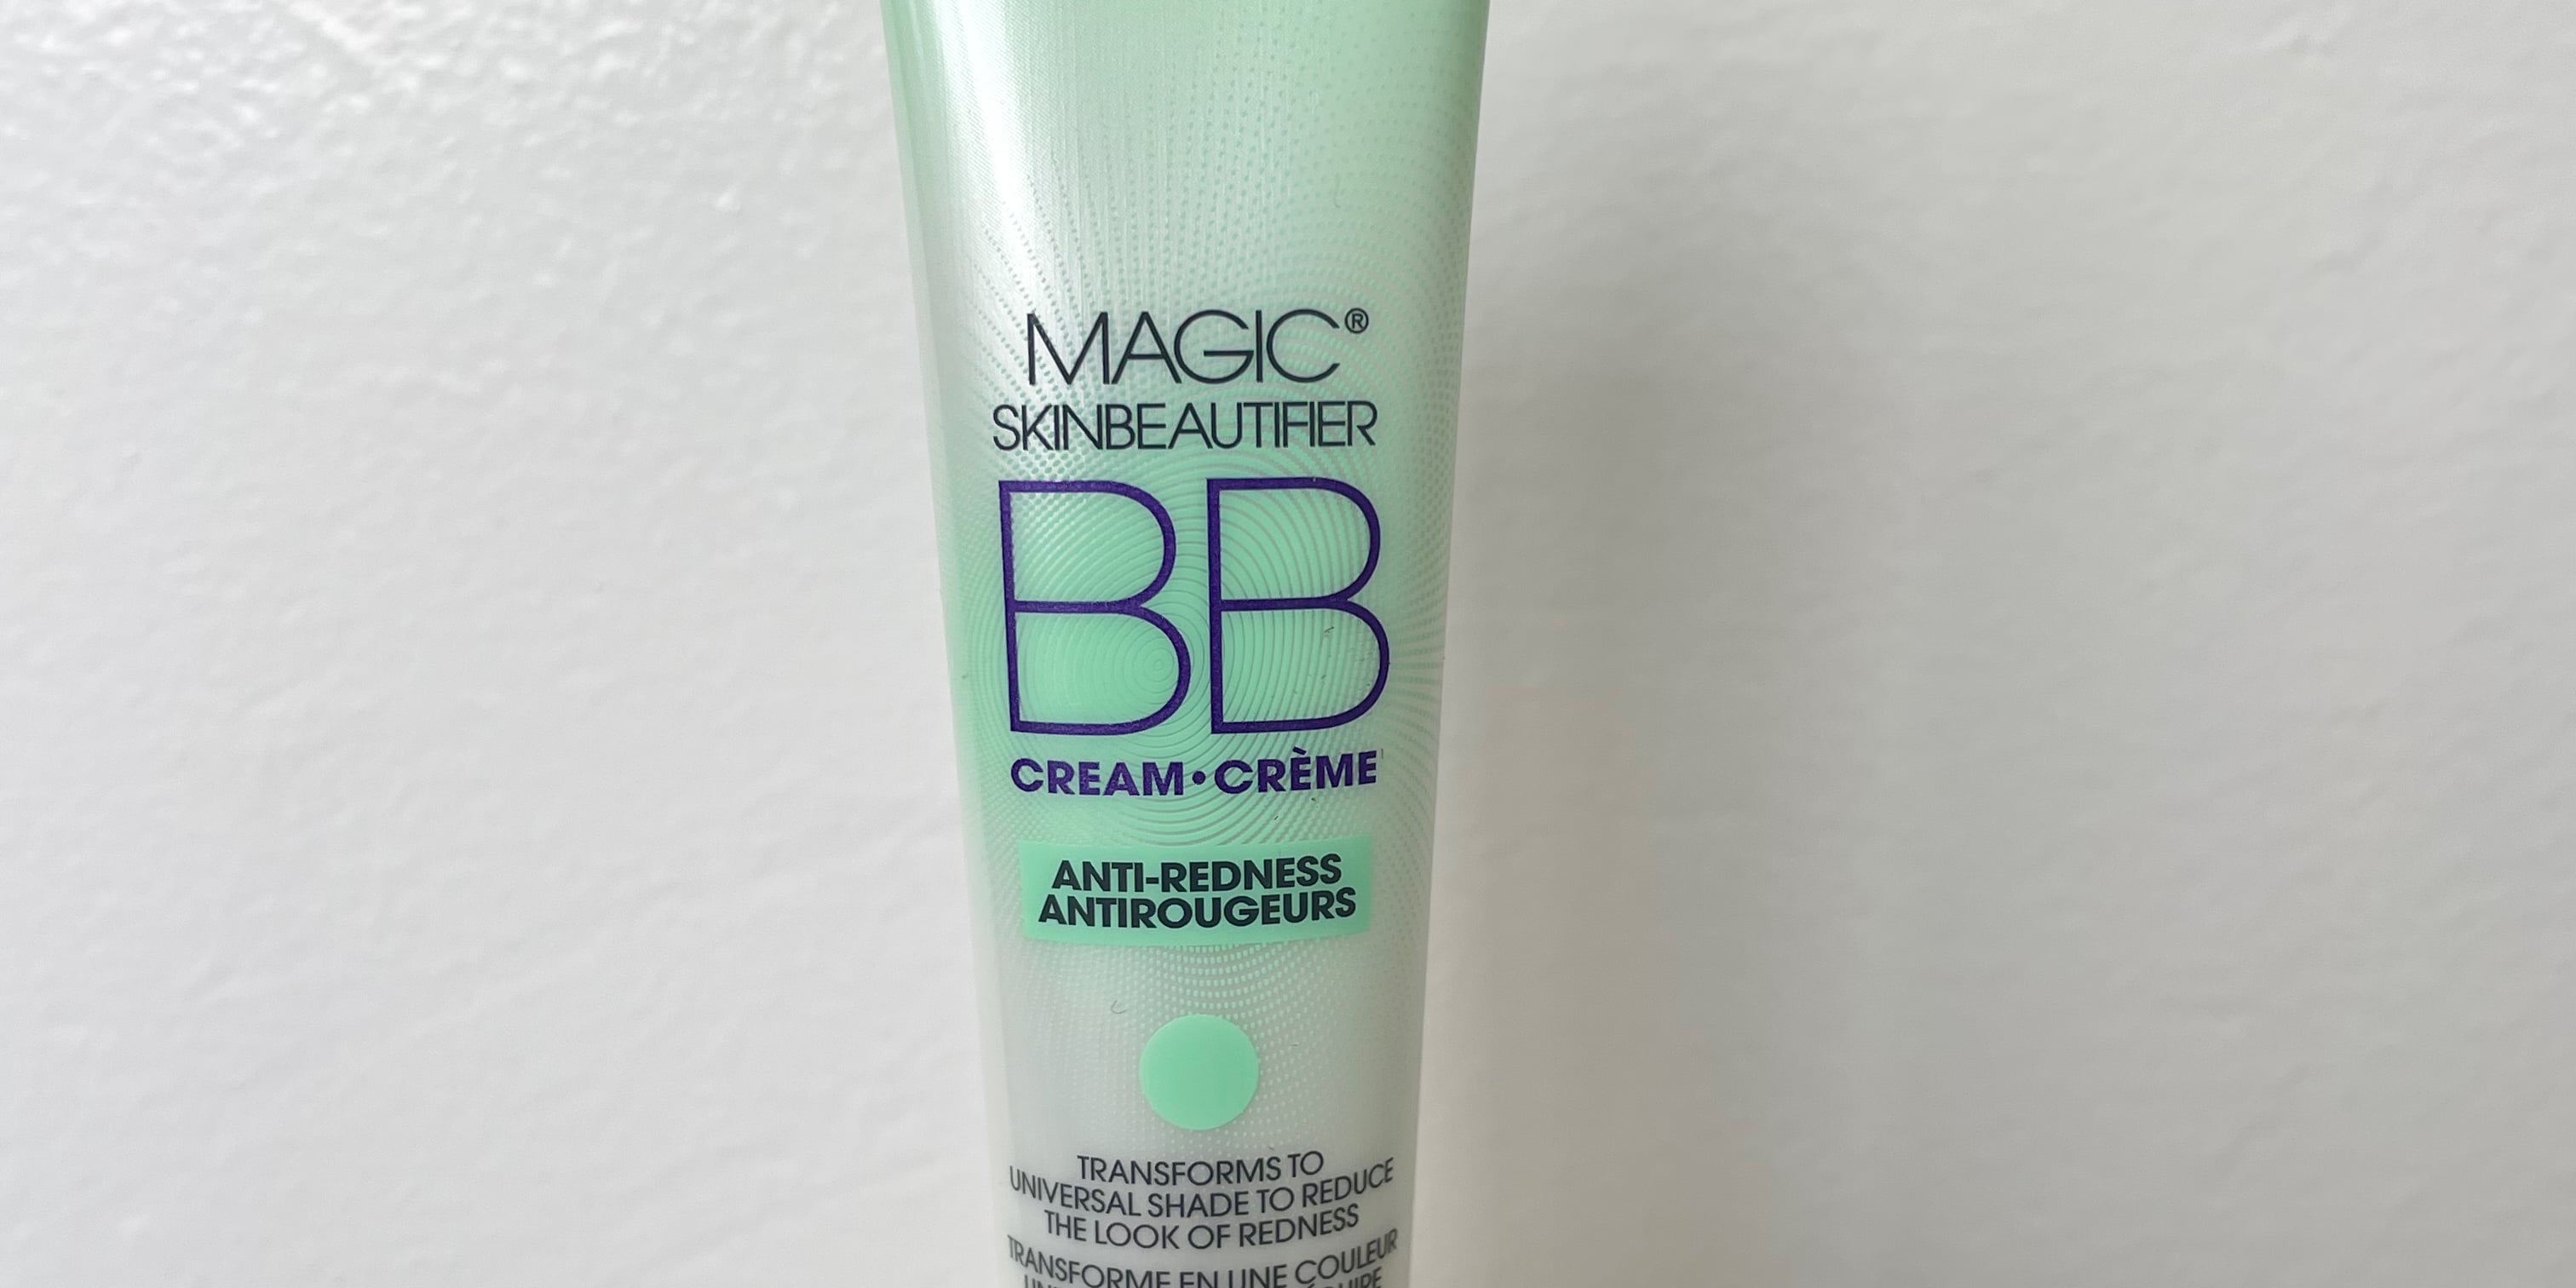 L'Oreal Paris Magic Skin Beautifier BB Cream - Reviews